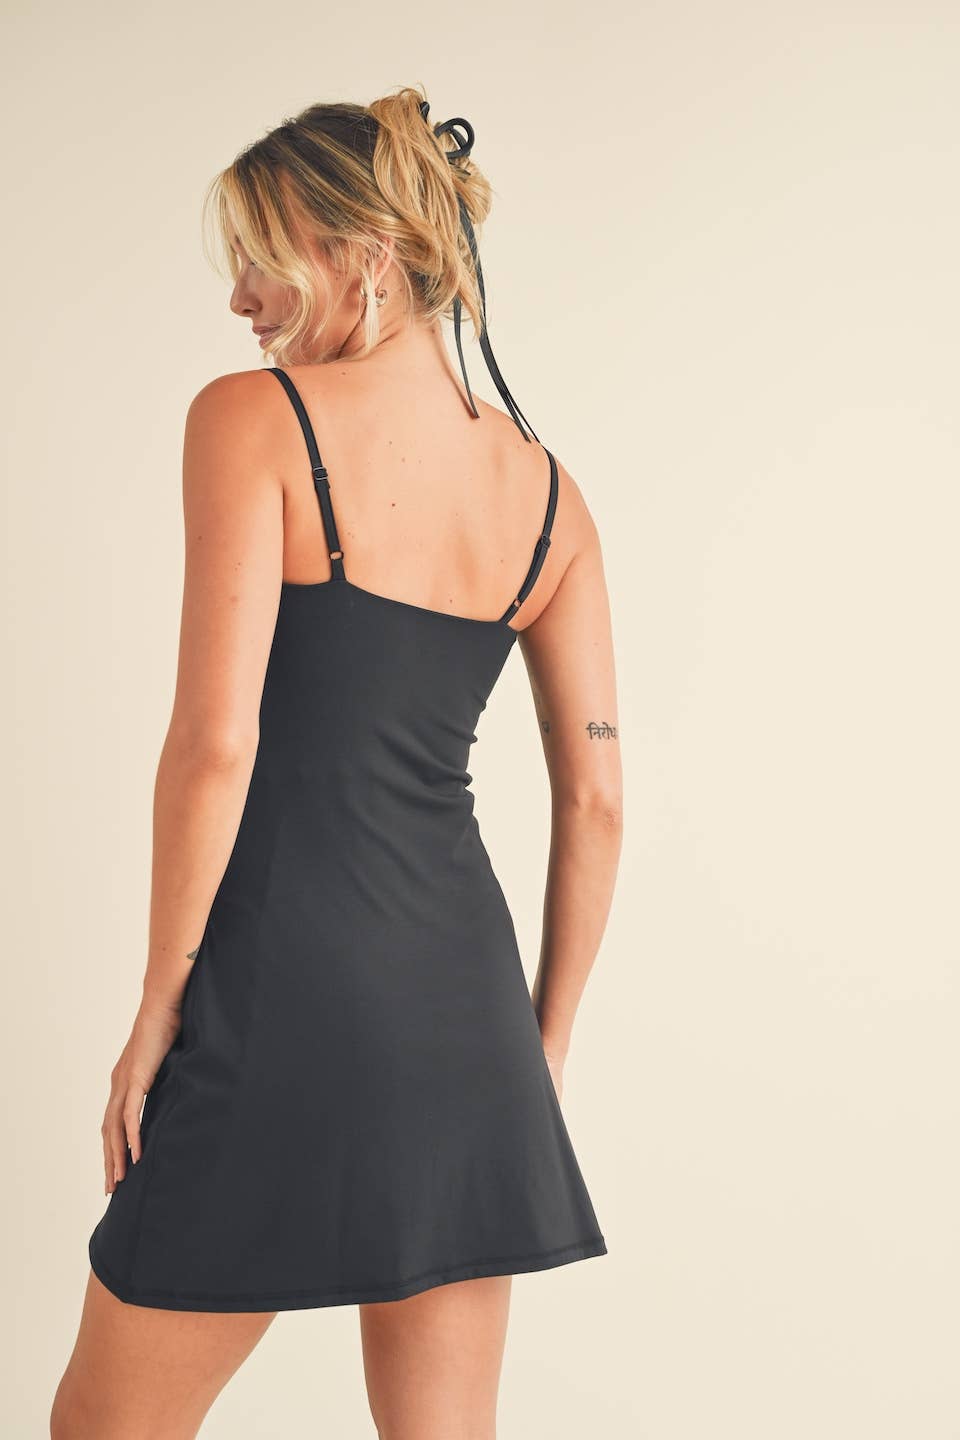 KIMBERLY C - Sweetheart Dress: Black / S